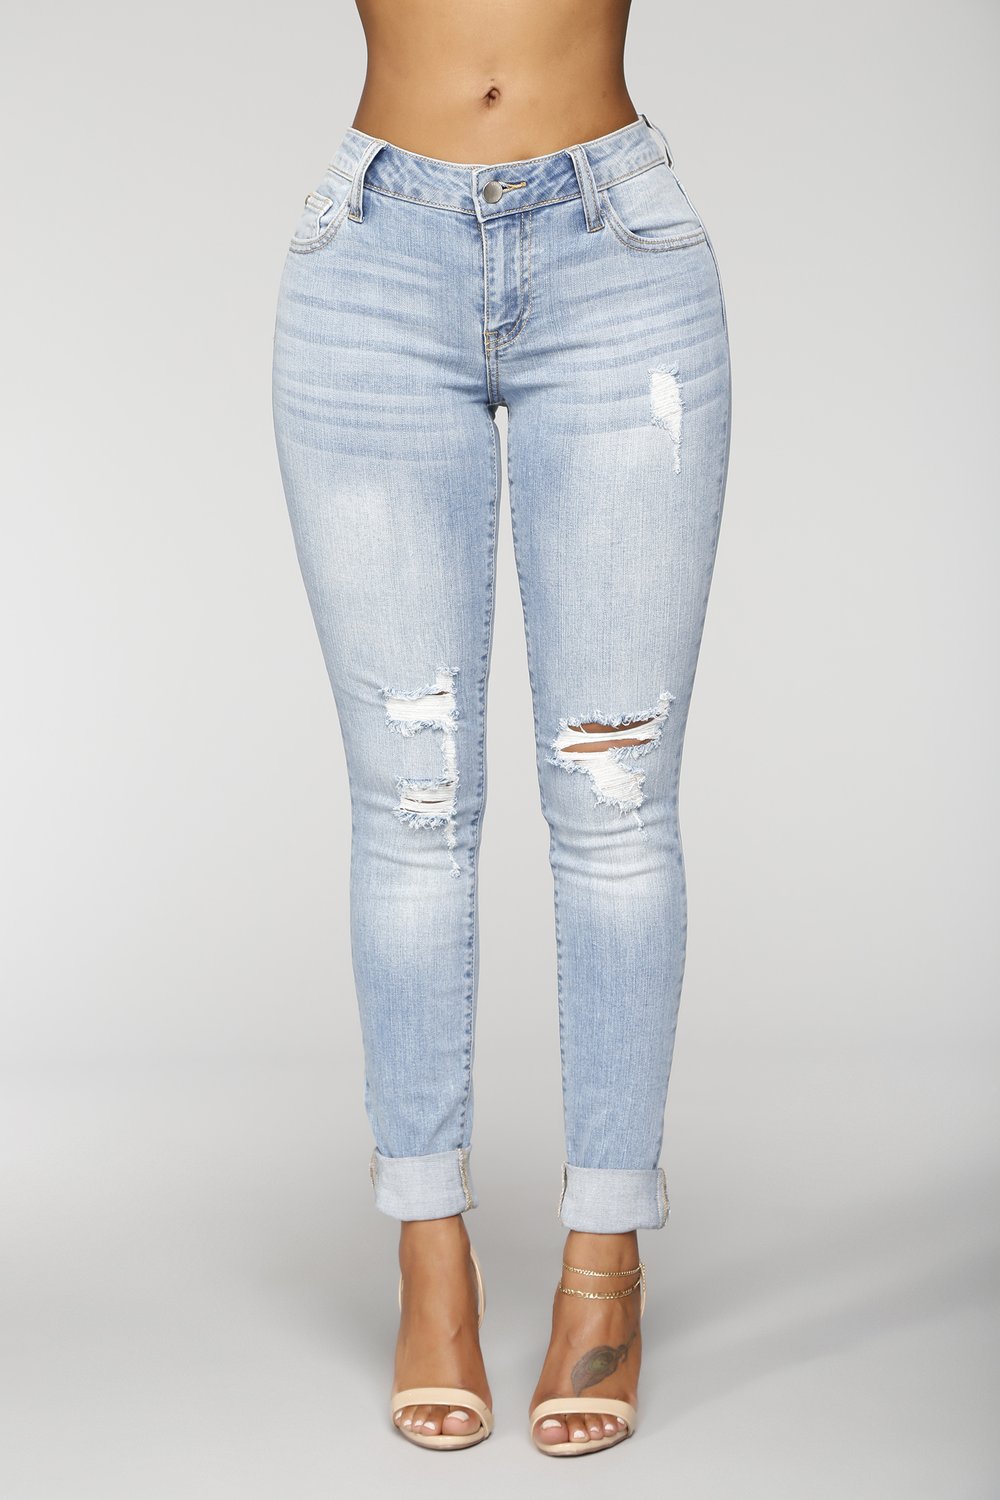 Fashion Nova Hazel High Rise Distressed Jeans Denim